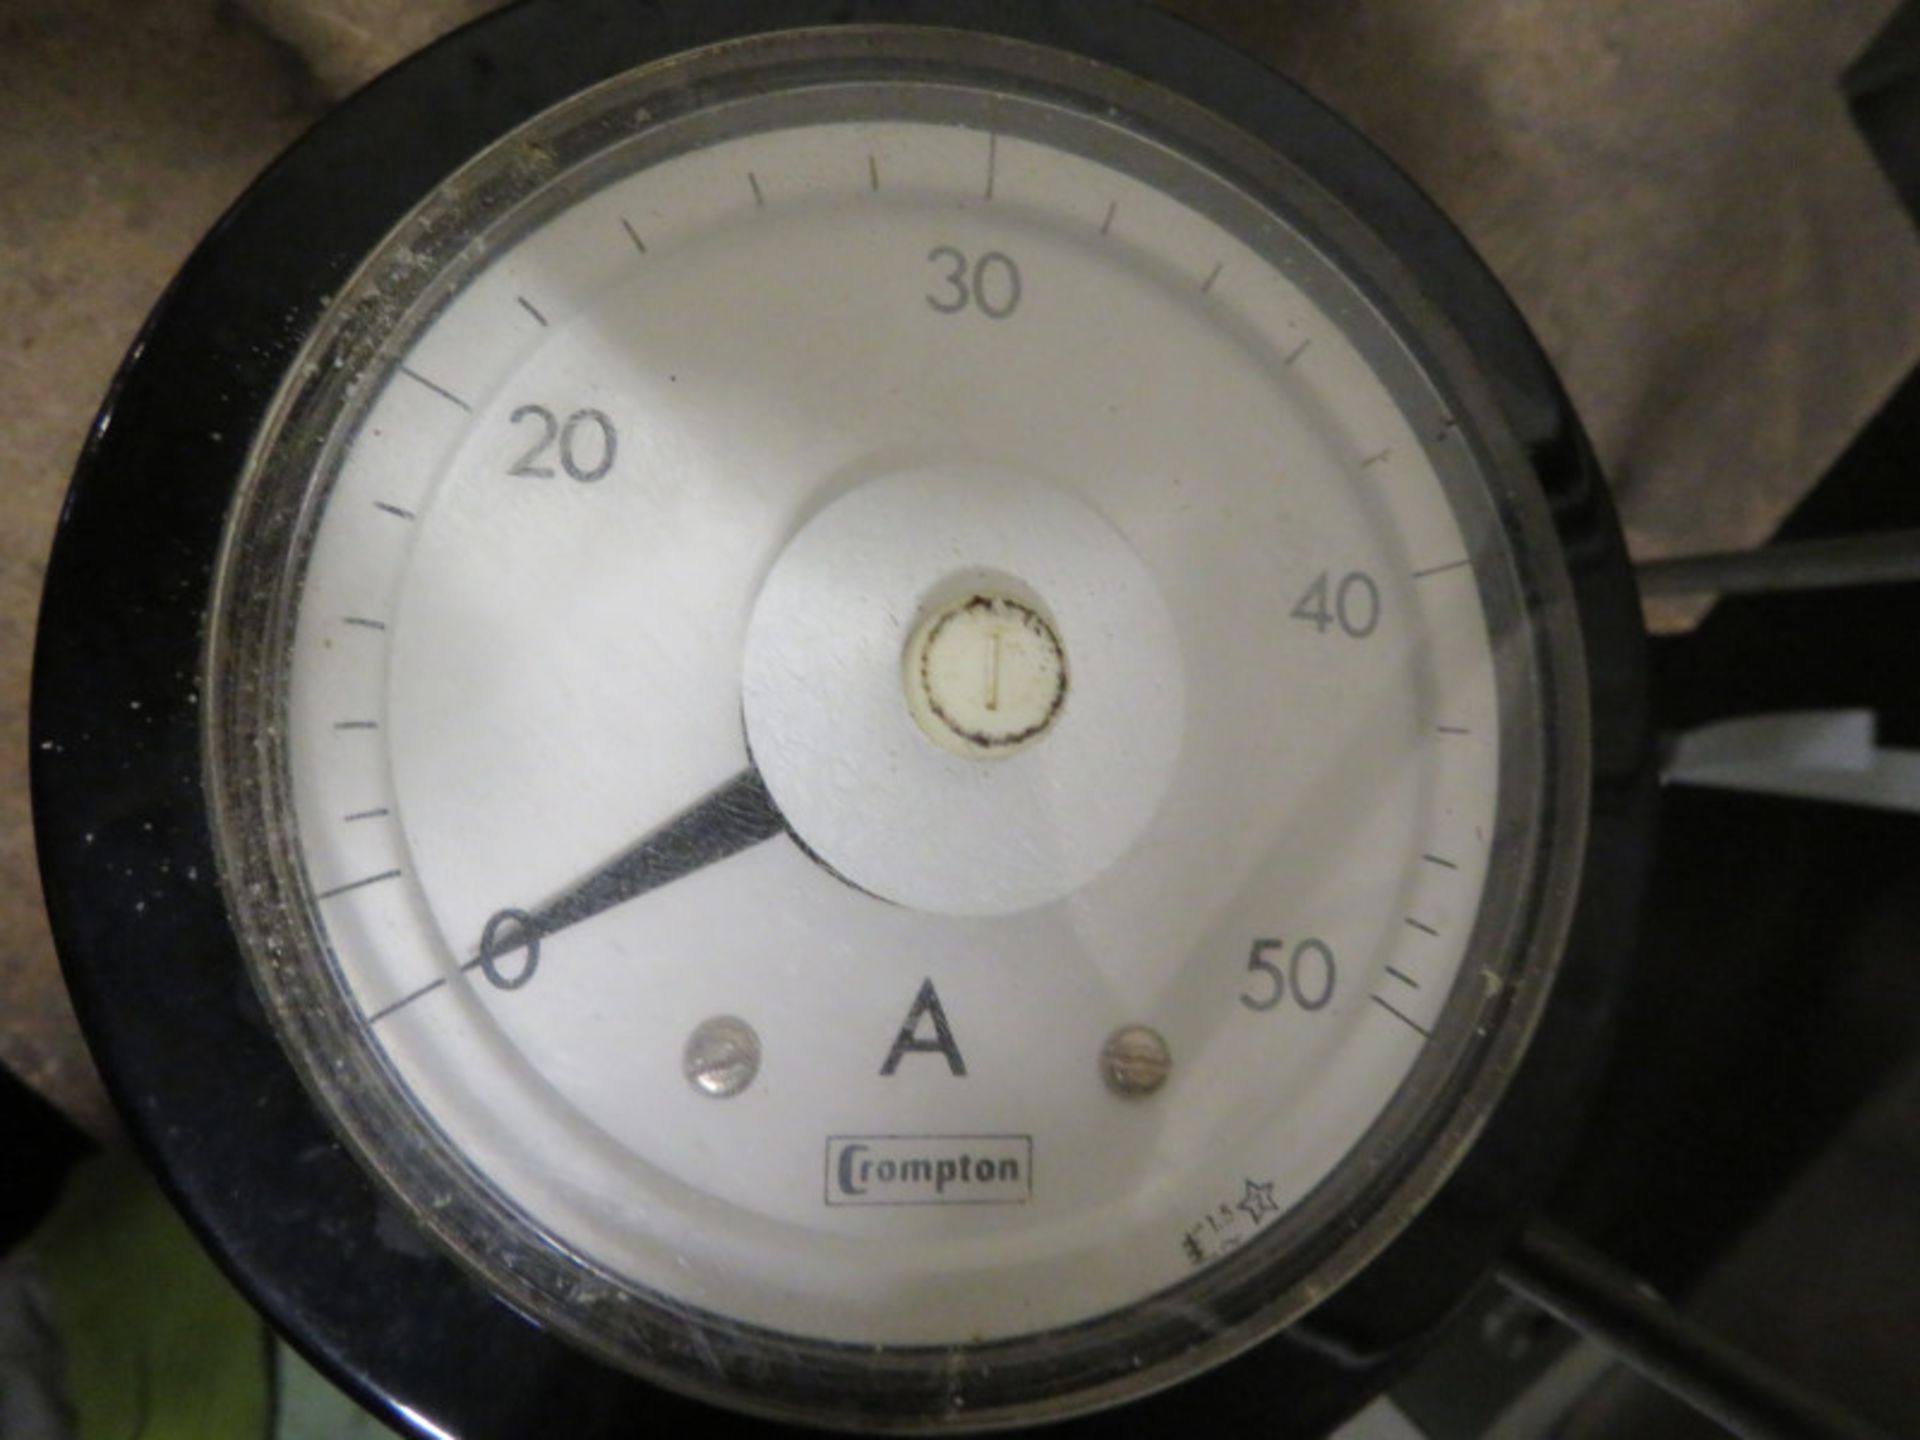 Crompton Dial amp gauge - Image 2 of 3